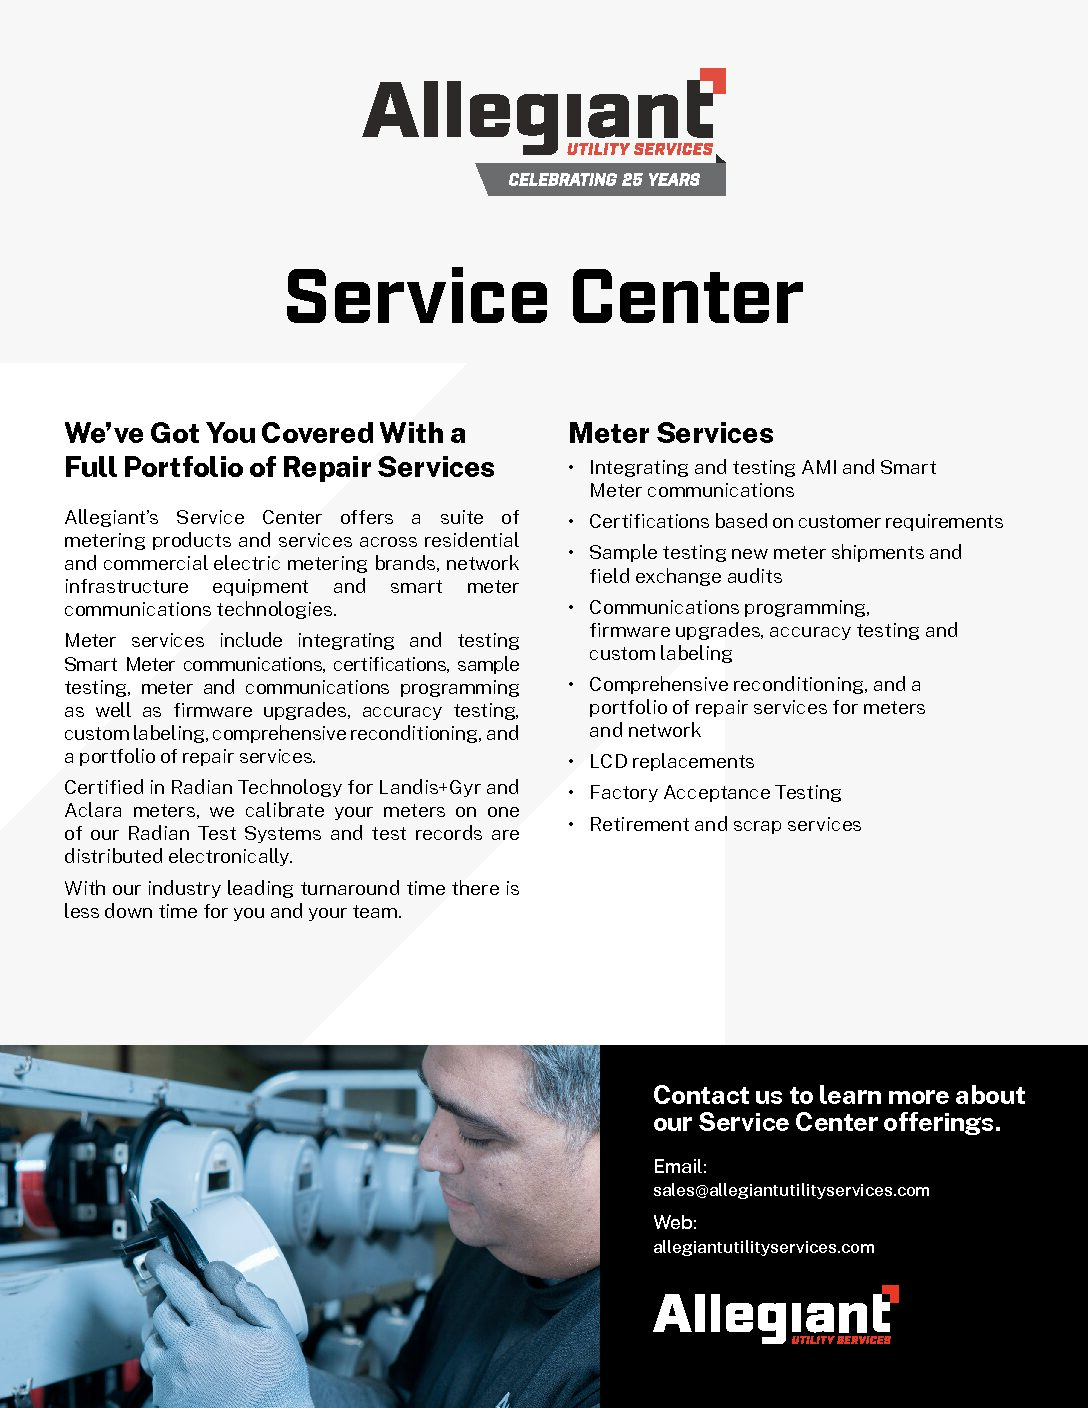 Service Center Information